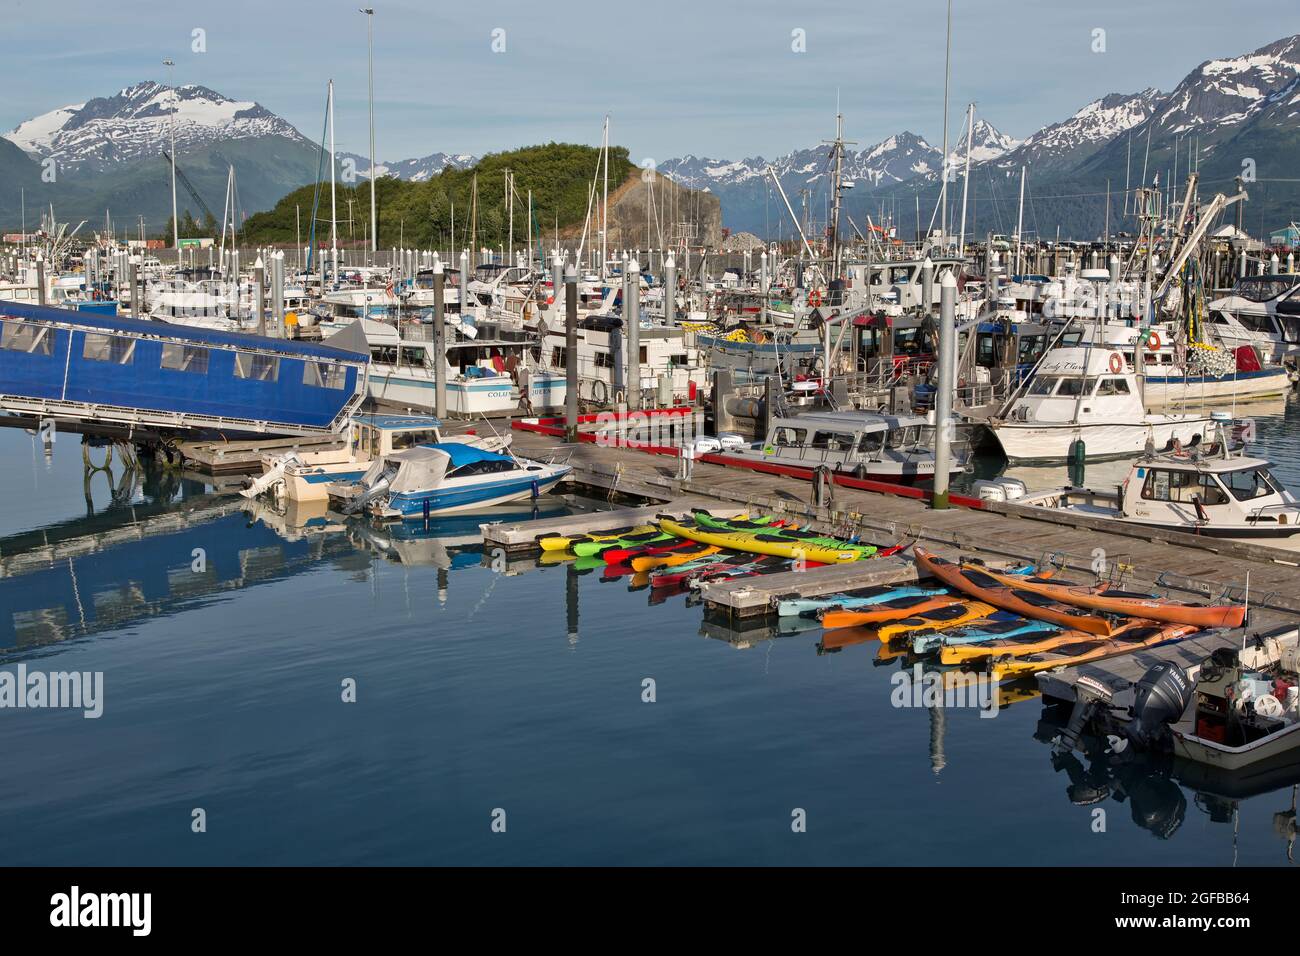 Port OF Valdez, fishing fleet, kayak rentals, end of June, natural backdrop of heavily glaciated Chugach mountain range. Stock Photo